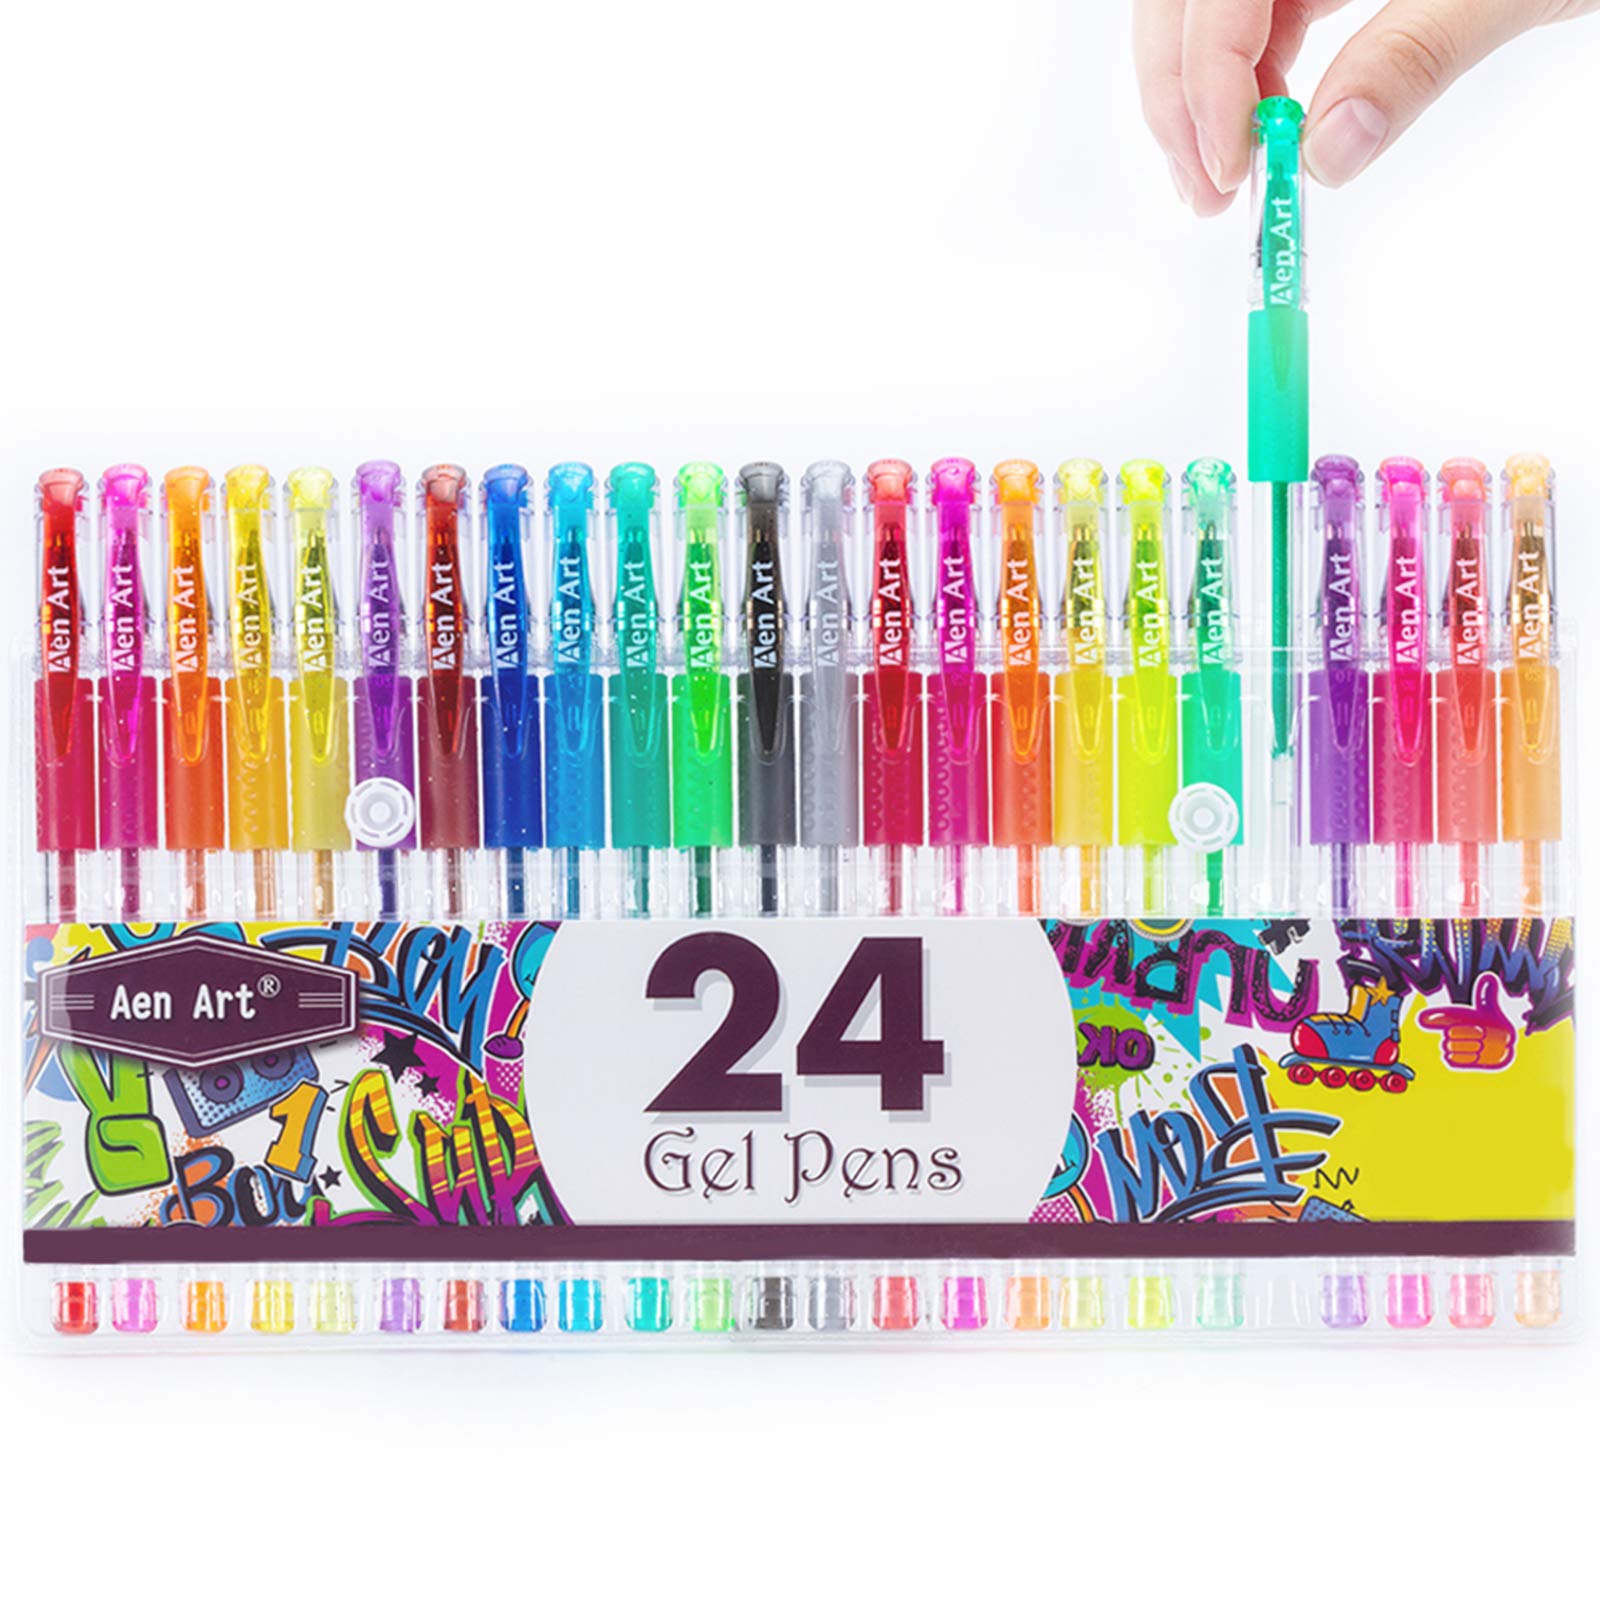 Gel Pens 30 Colors Gel Marker Set Colored Pen with 40% More Ink for Adult Coloring Books Drawing Doodling Crafts Scrapbooks Bullet Journaling